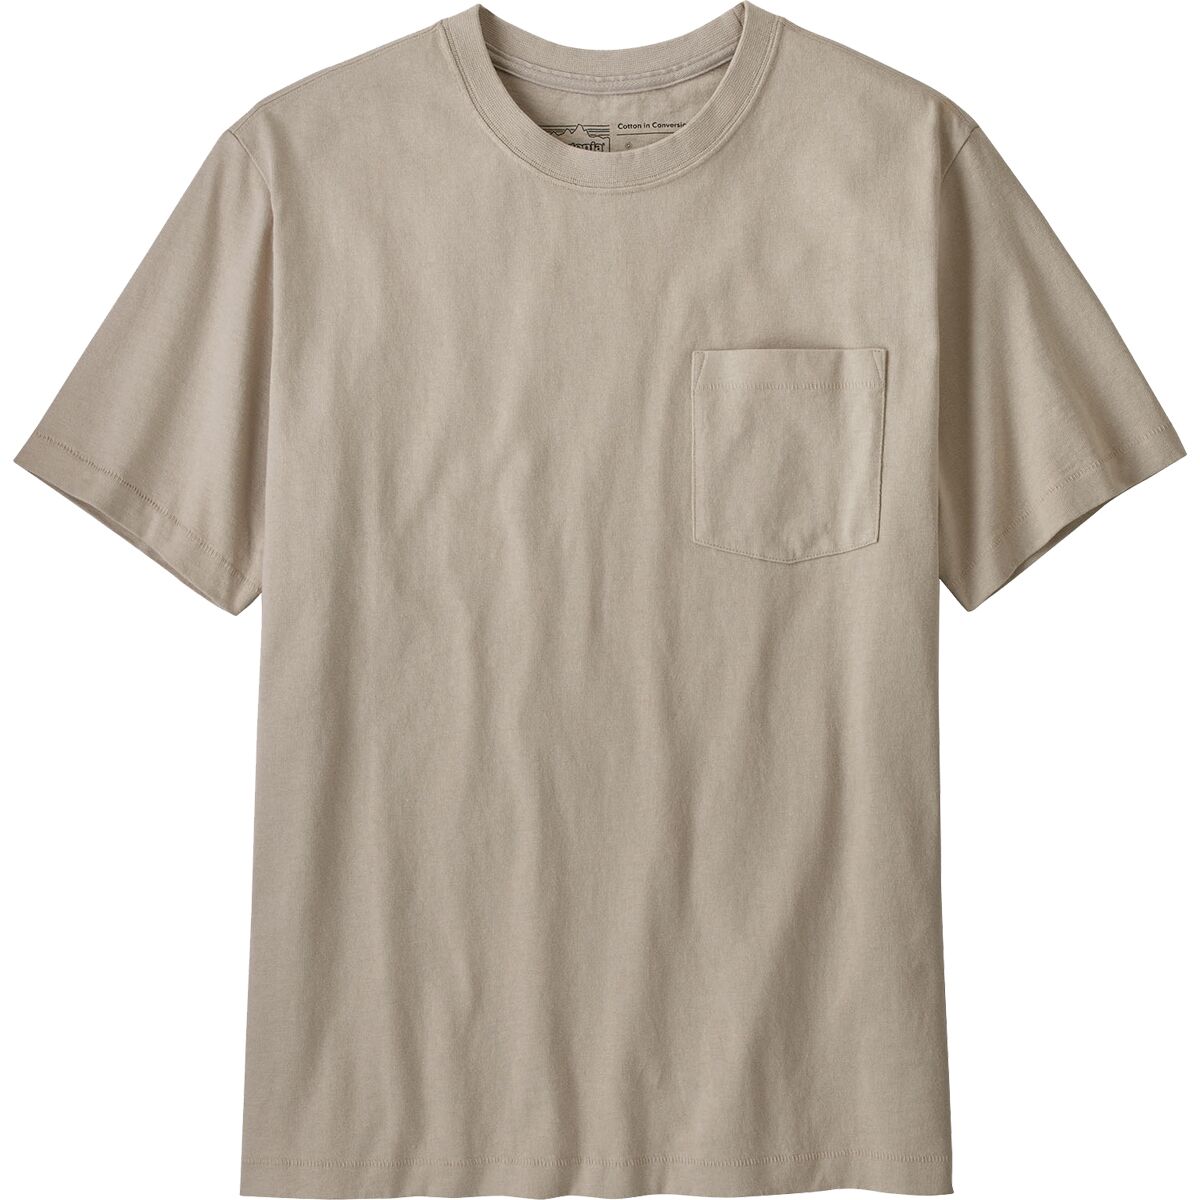 Cotton in Conversion Midweight Pocket T-Shirt - Men